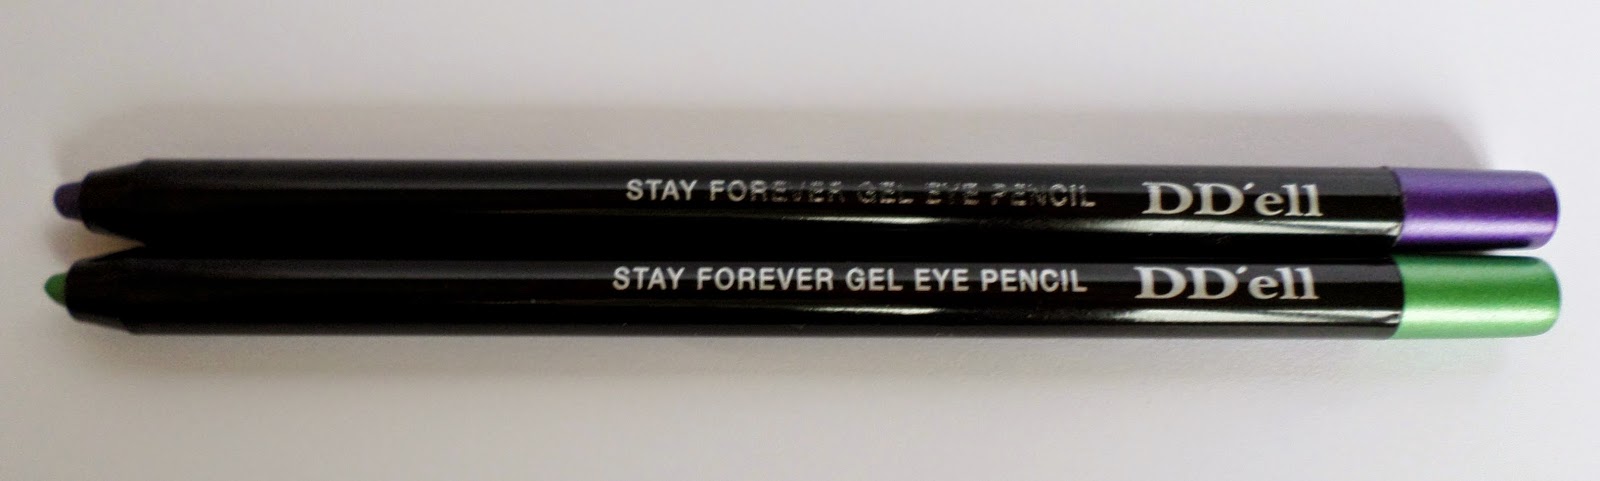 DD'ell Stay Forever Gel Eye Pencil 06 Twilight Purple and 08 Garden Light 1.2g rrp $14 